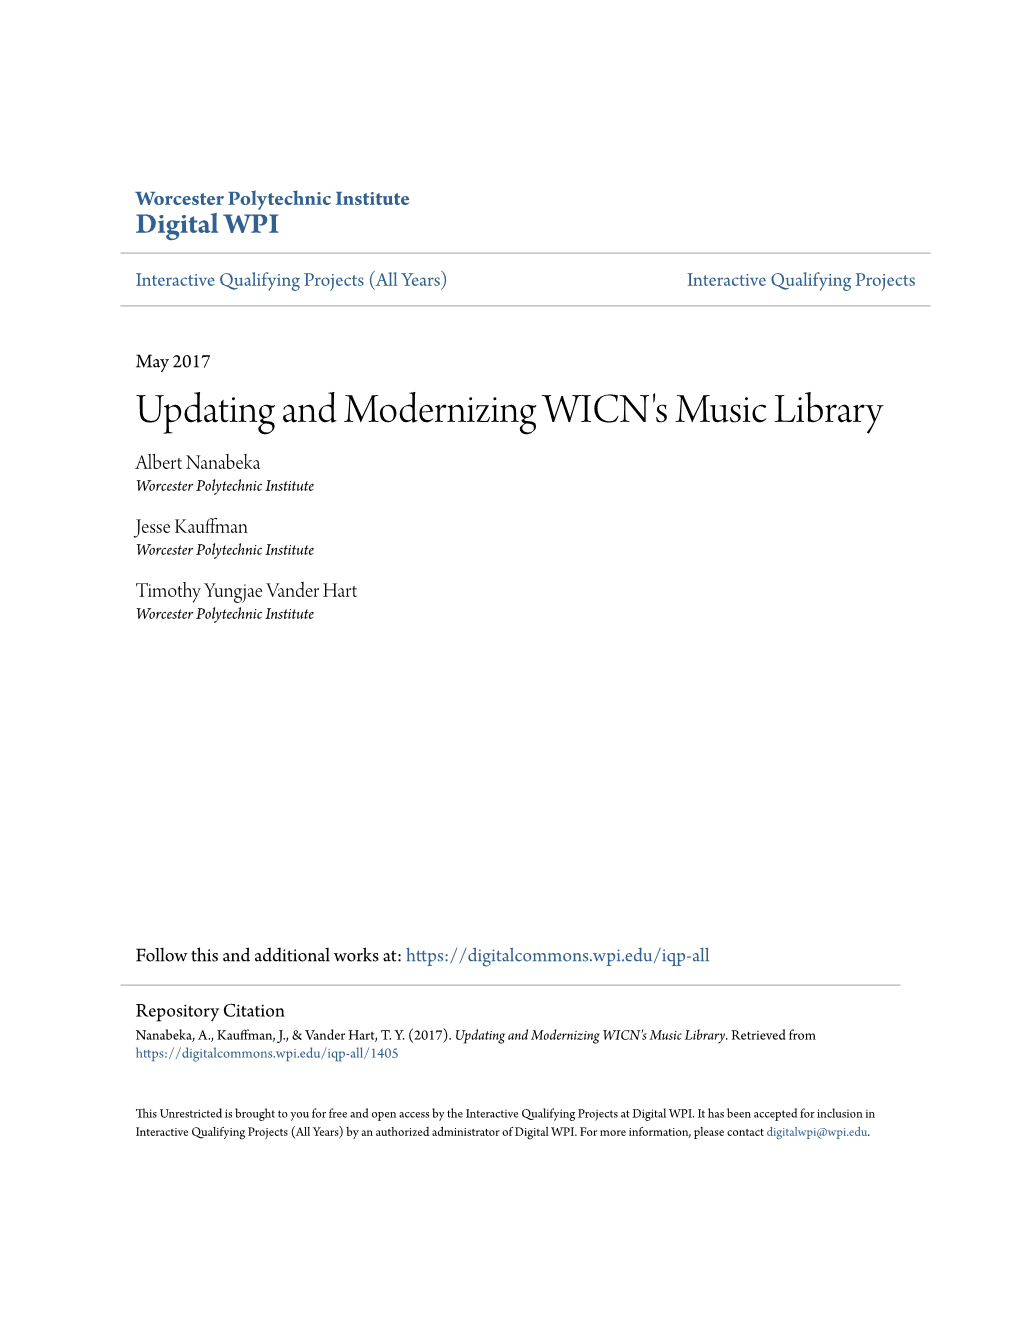 Updating and Modernizing WICN's Music Library Albert Nanabeka Worcester Polytechnic Institute